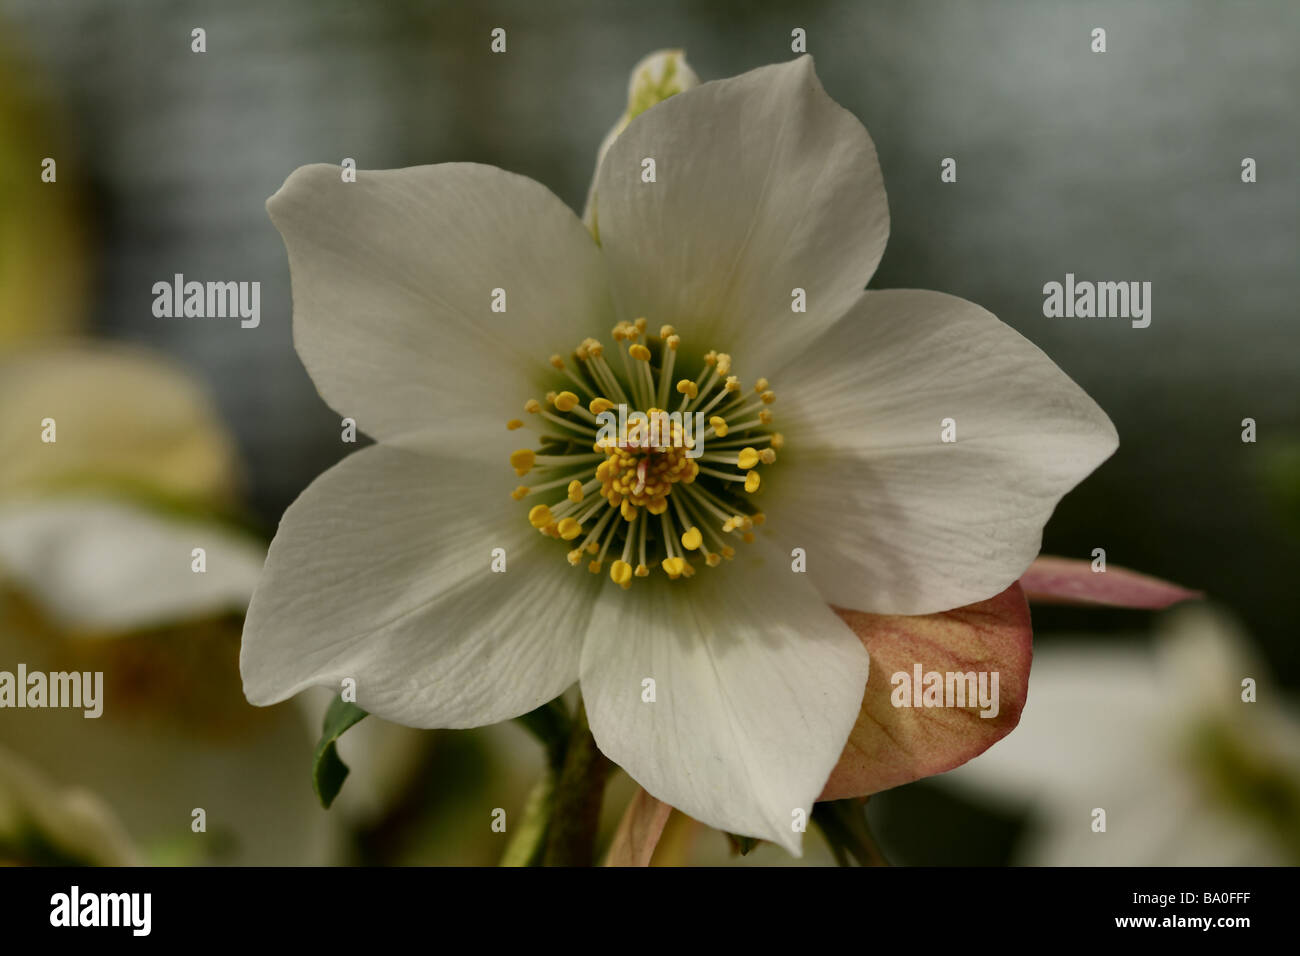 Flower Bloom di Helleborus niger famiglia Ranunculaceae in macro o close up mostra fiore dettagliata struttura e forma Foto Stock